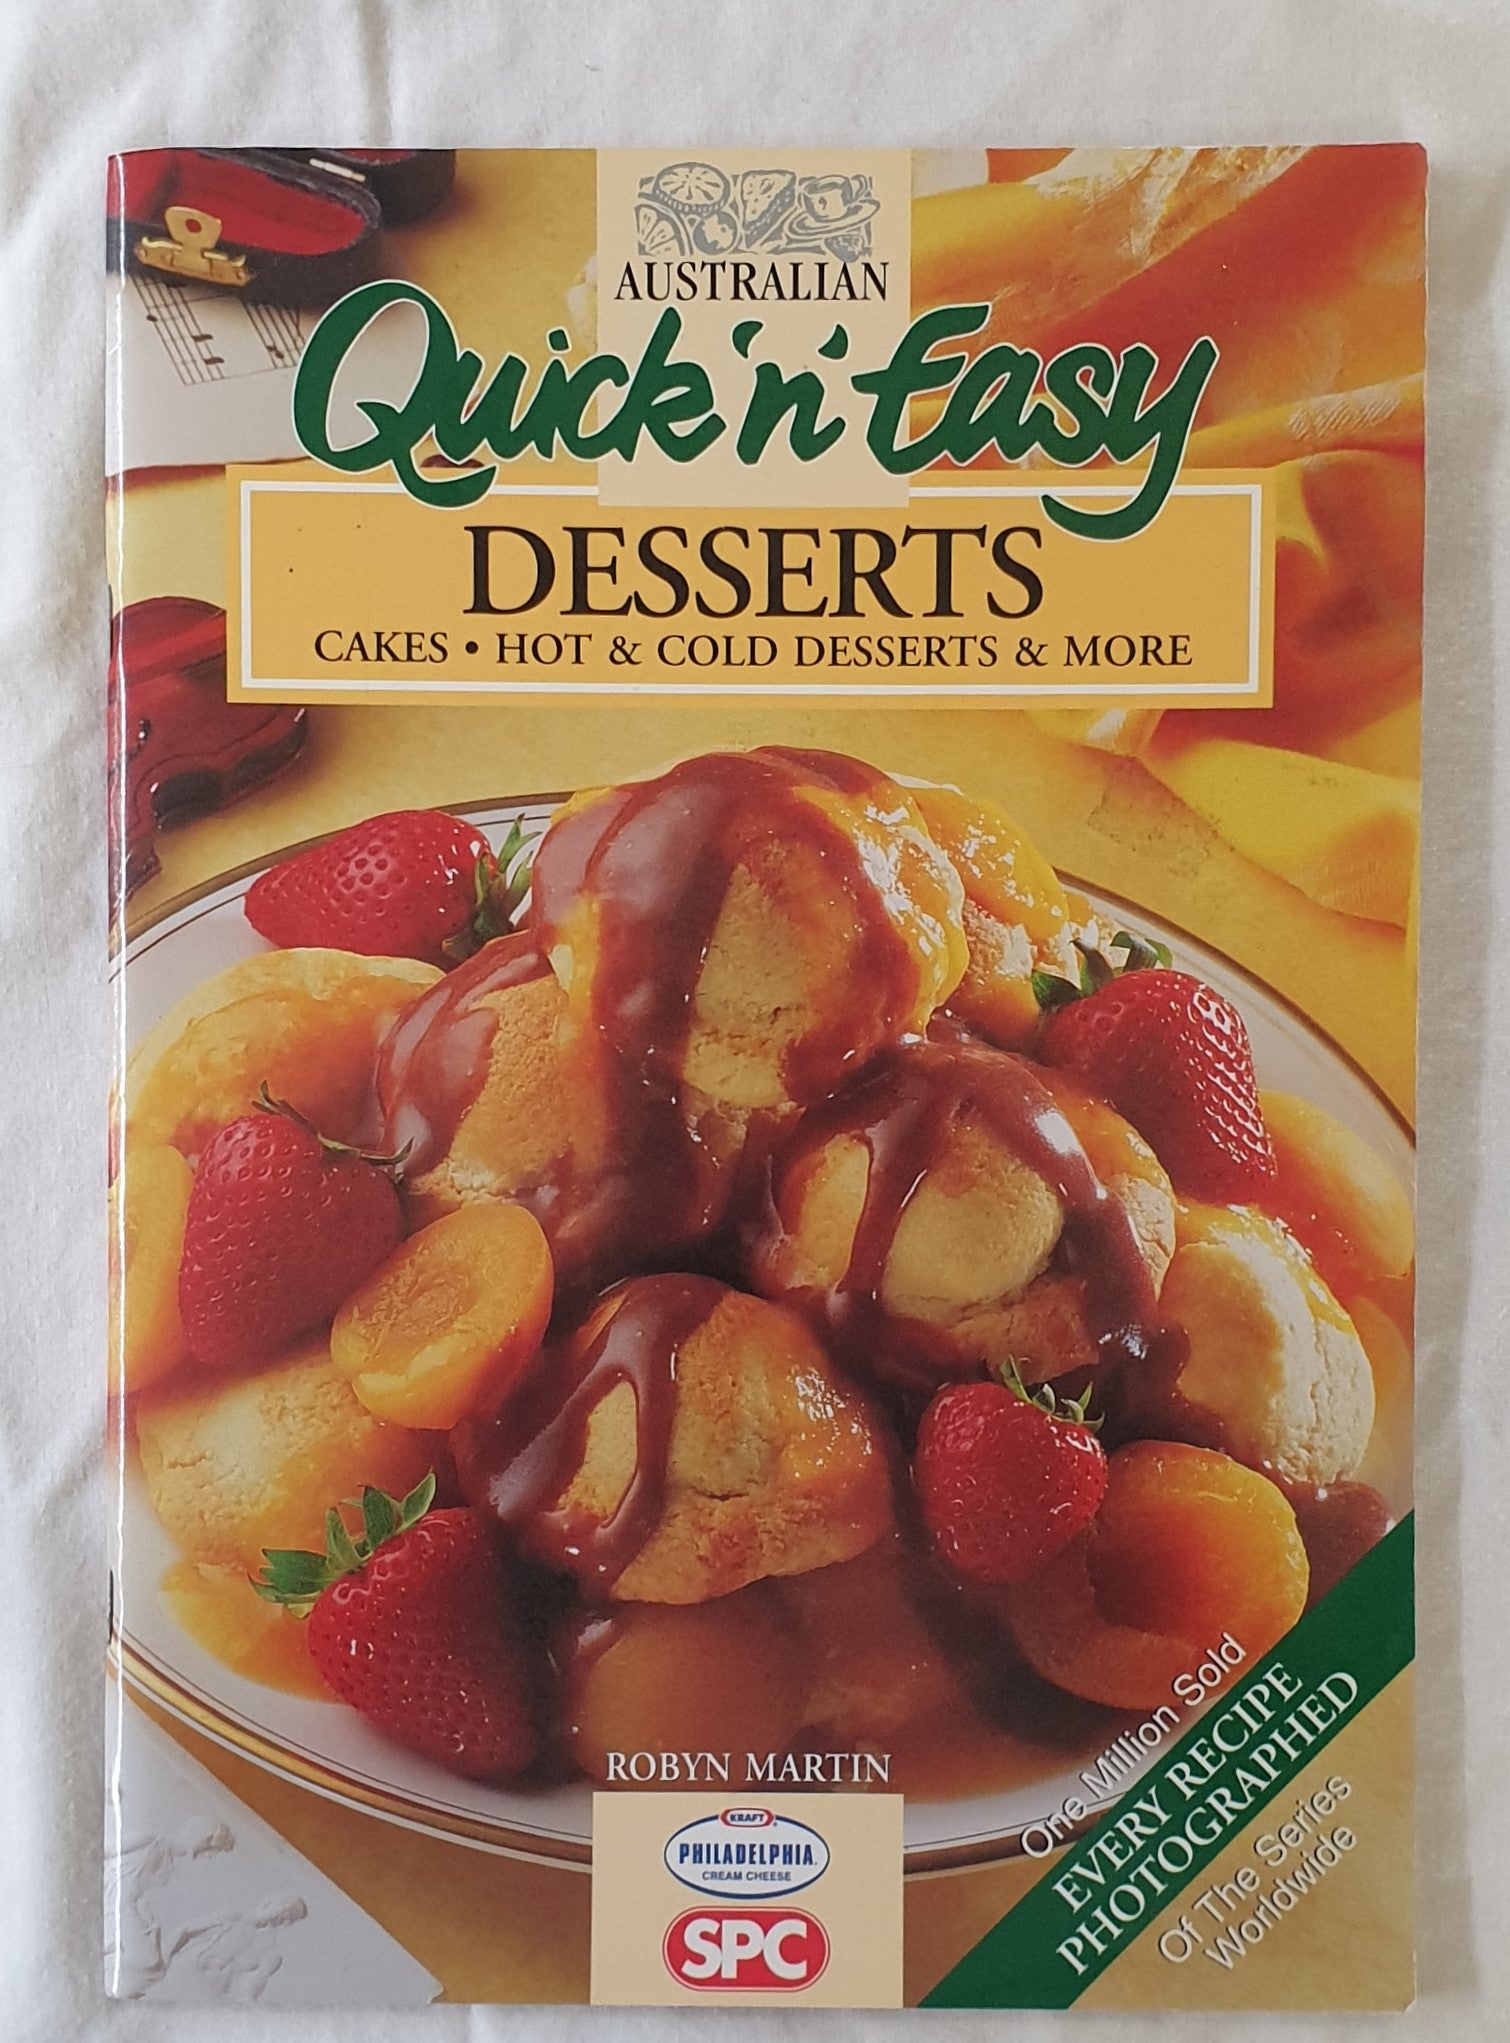 Quick ‘n’ Easy Desserts by Robyn Martin